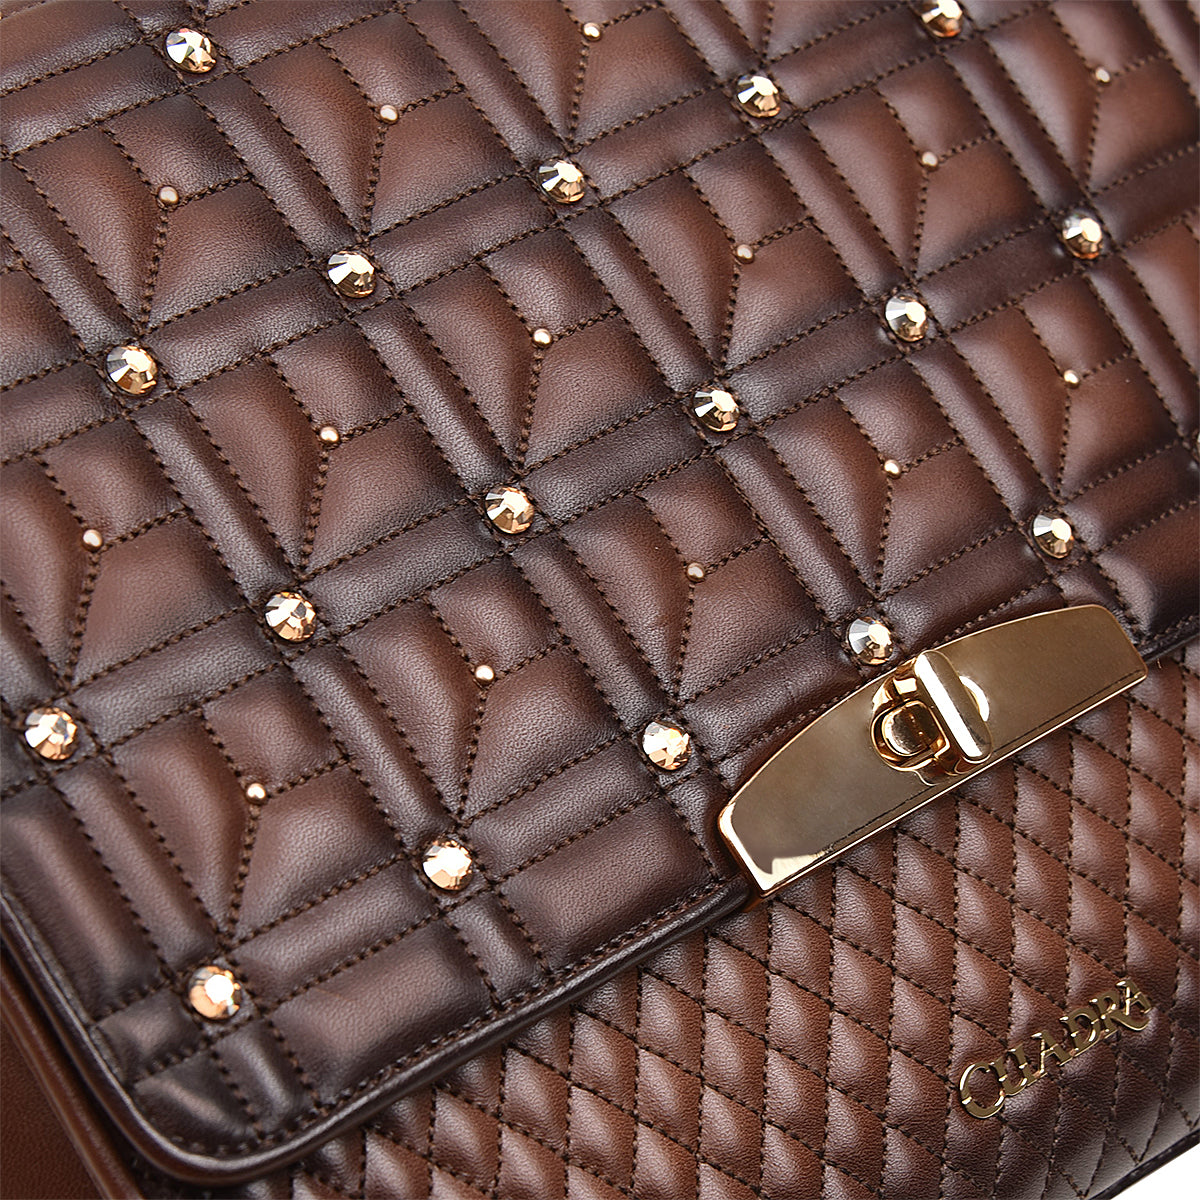 Honey leather embroidered handbag, Austrian crystals - BOD07RS - Cuadra Shop